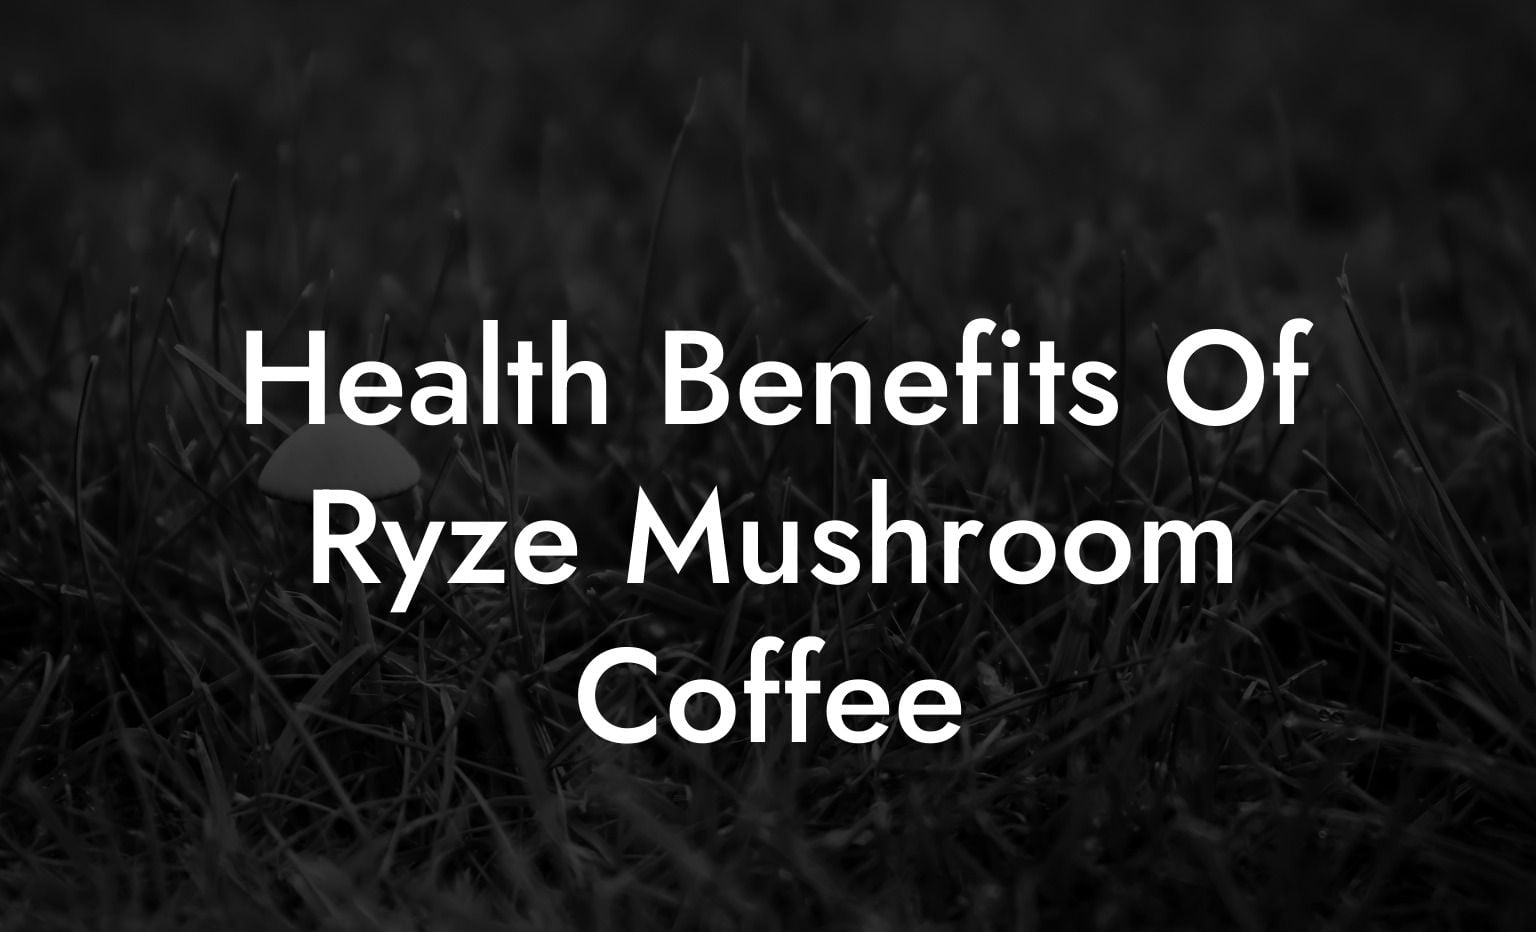 Health Benefits Of Ryze Mushroom Coffee